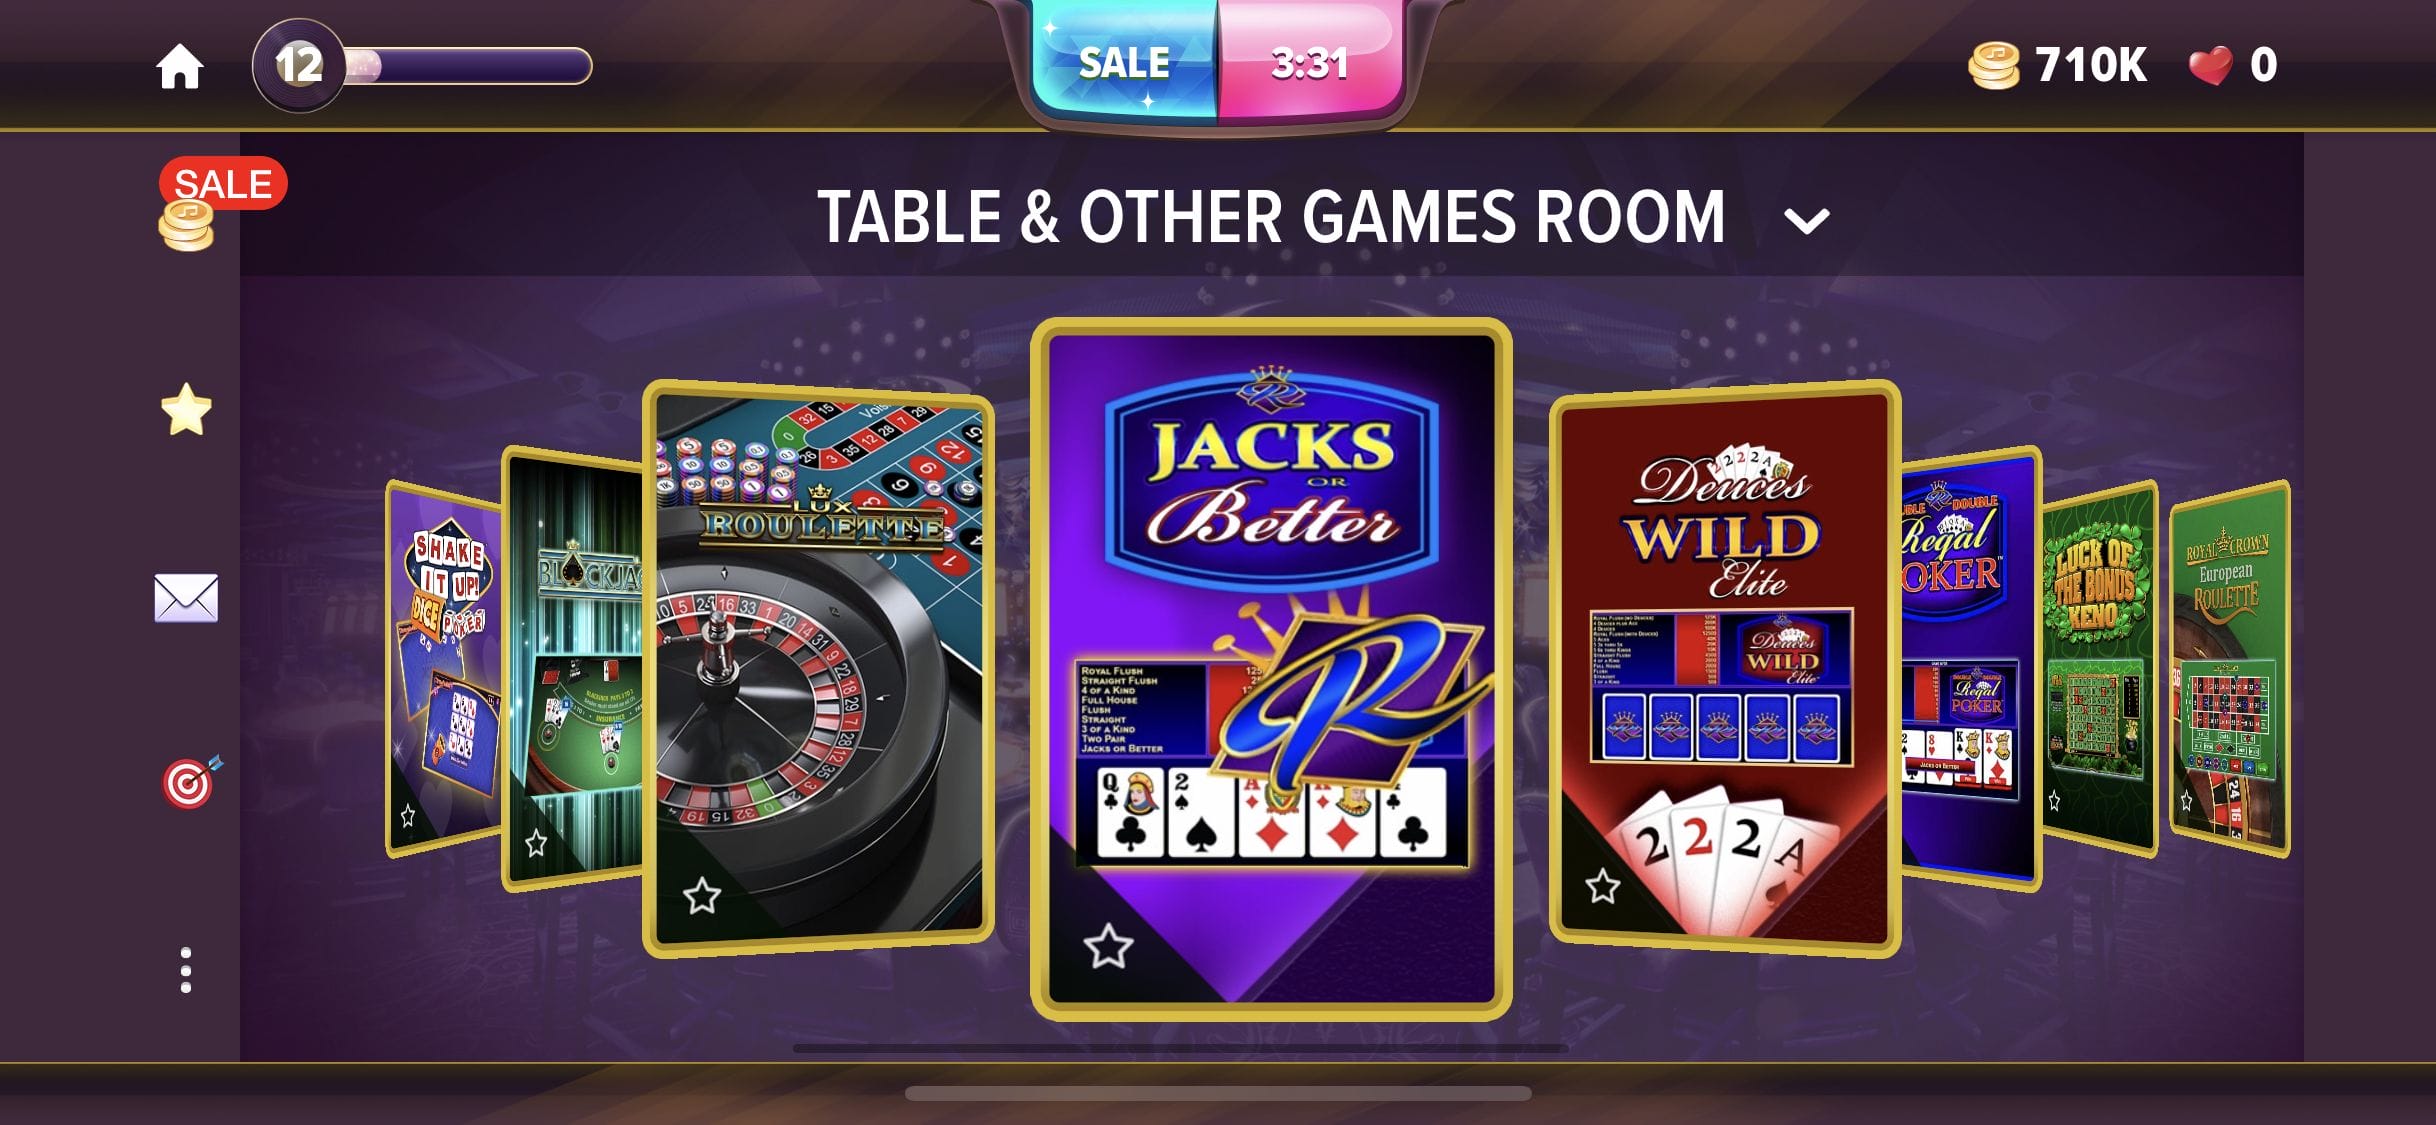 hard rock social casino promo codes 2020